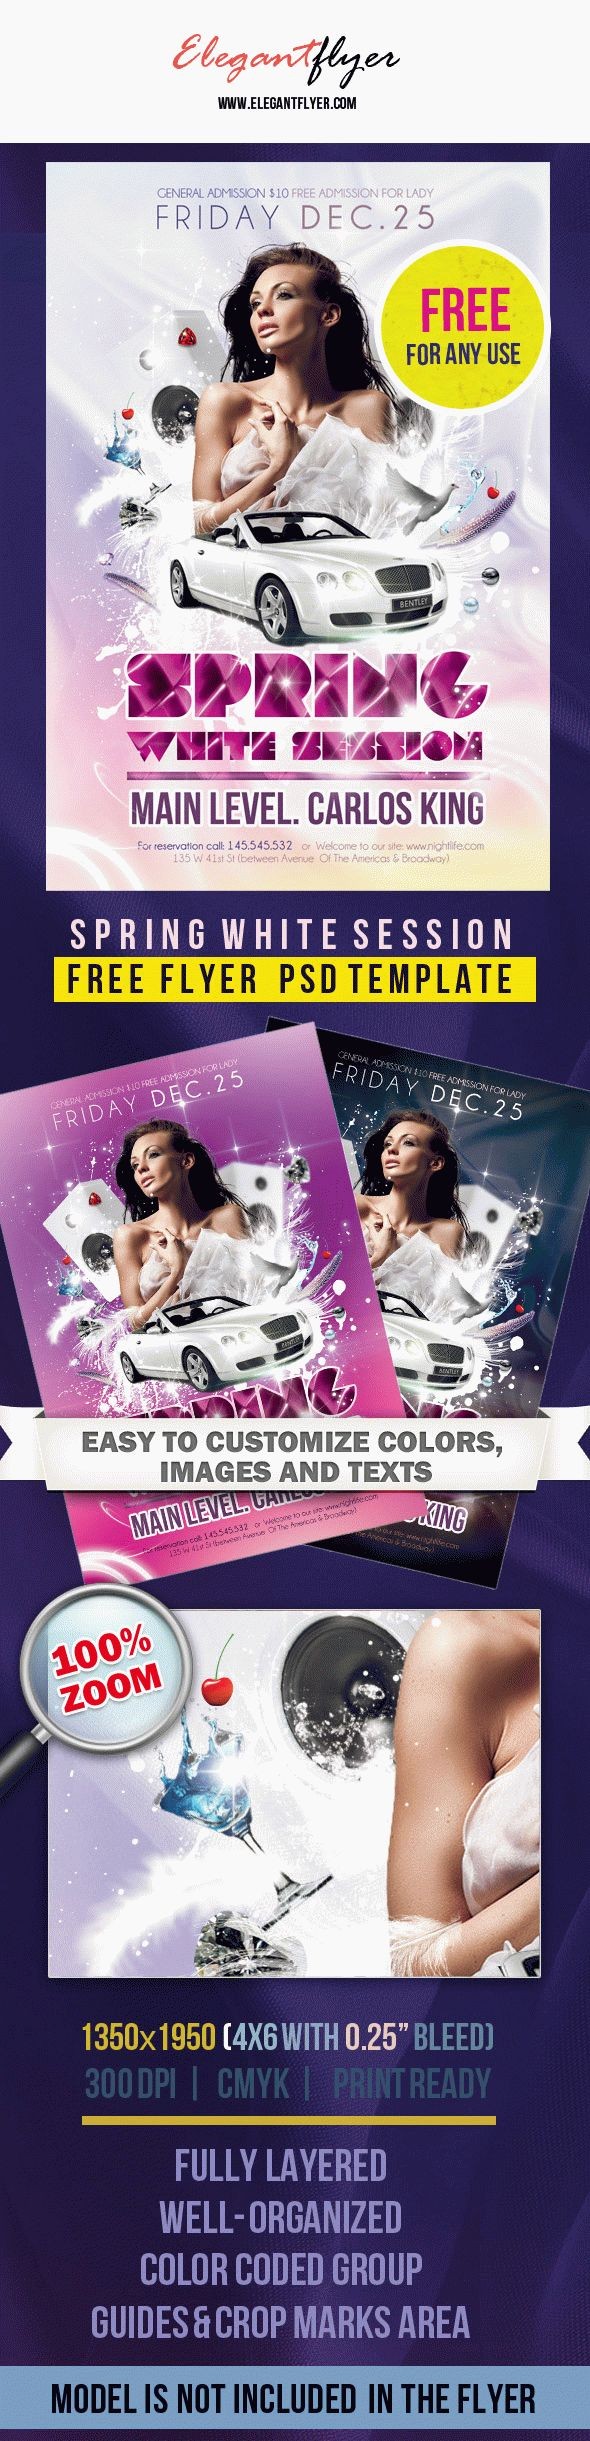 Free Flyer PSD Template by ElegantFlyer